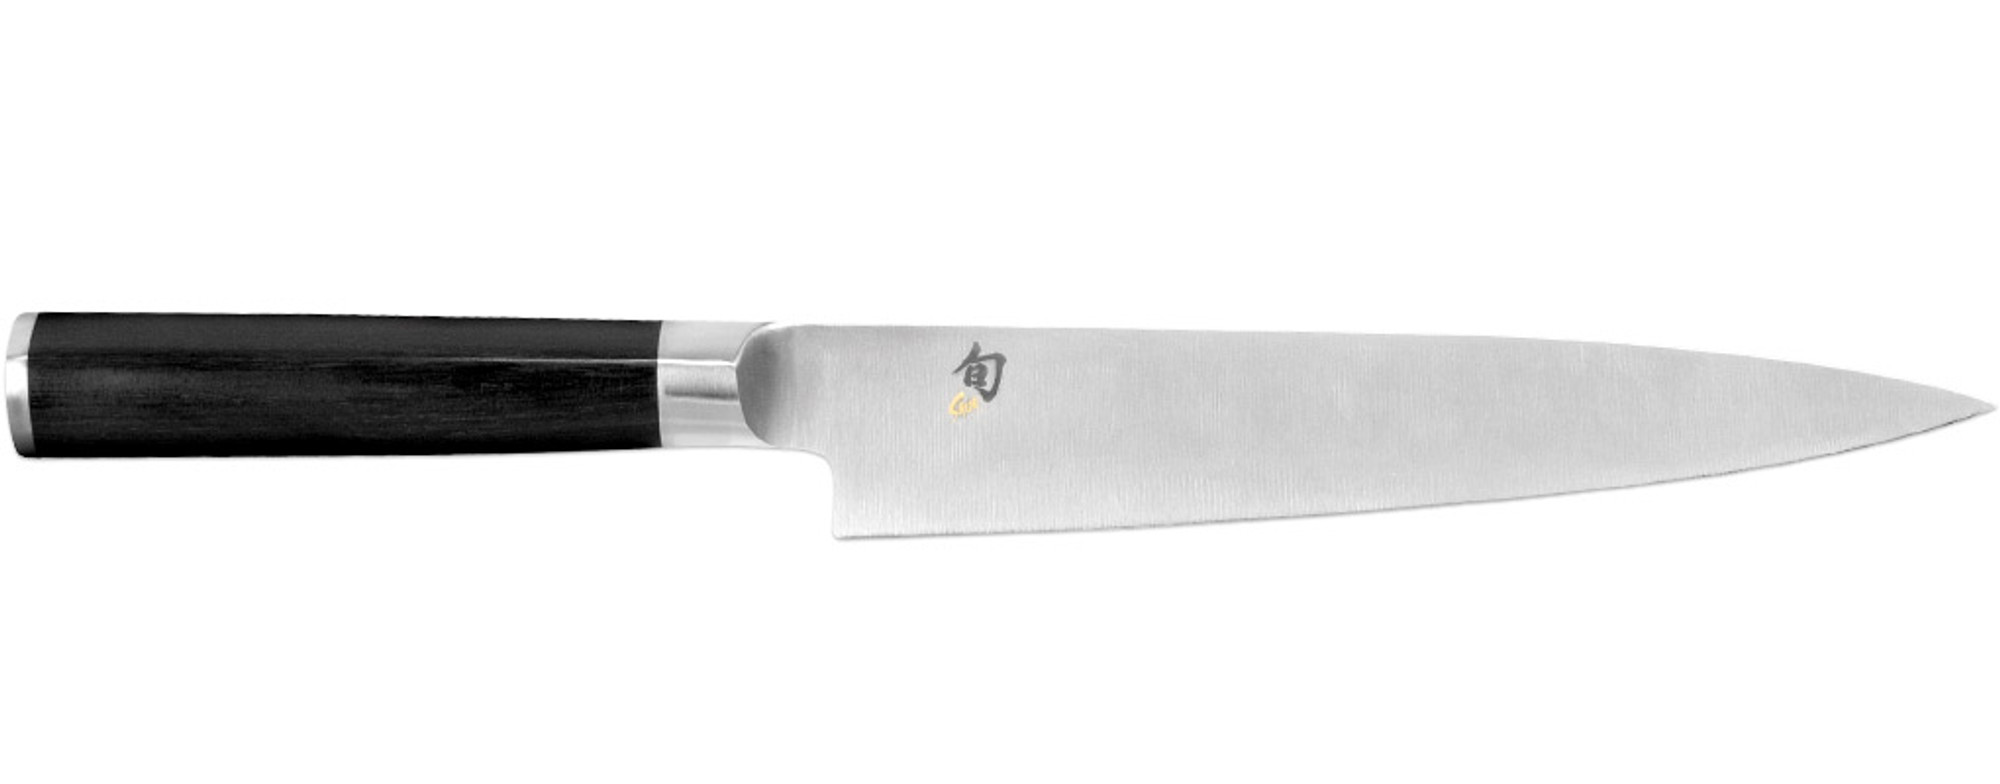 Shun DM761 Classic 7" Flexible Fillet Knife